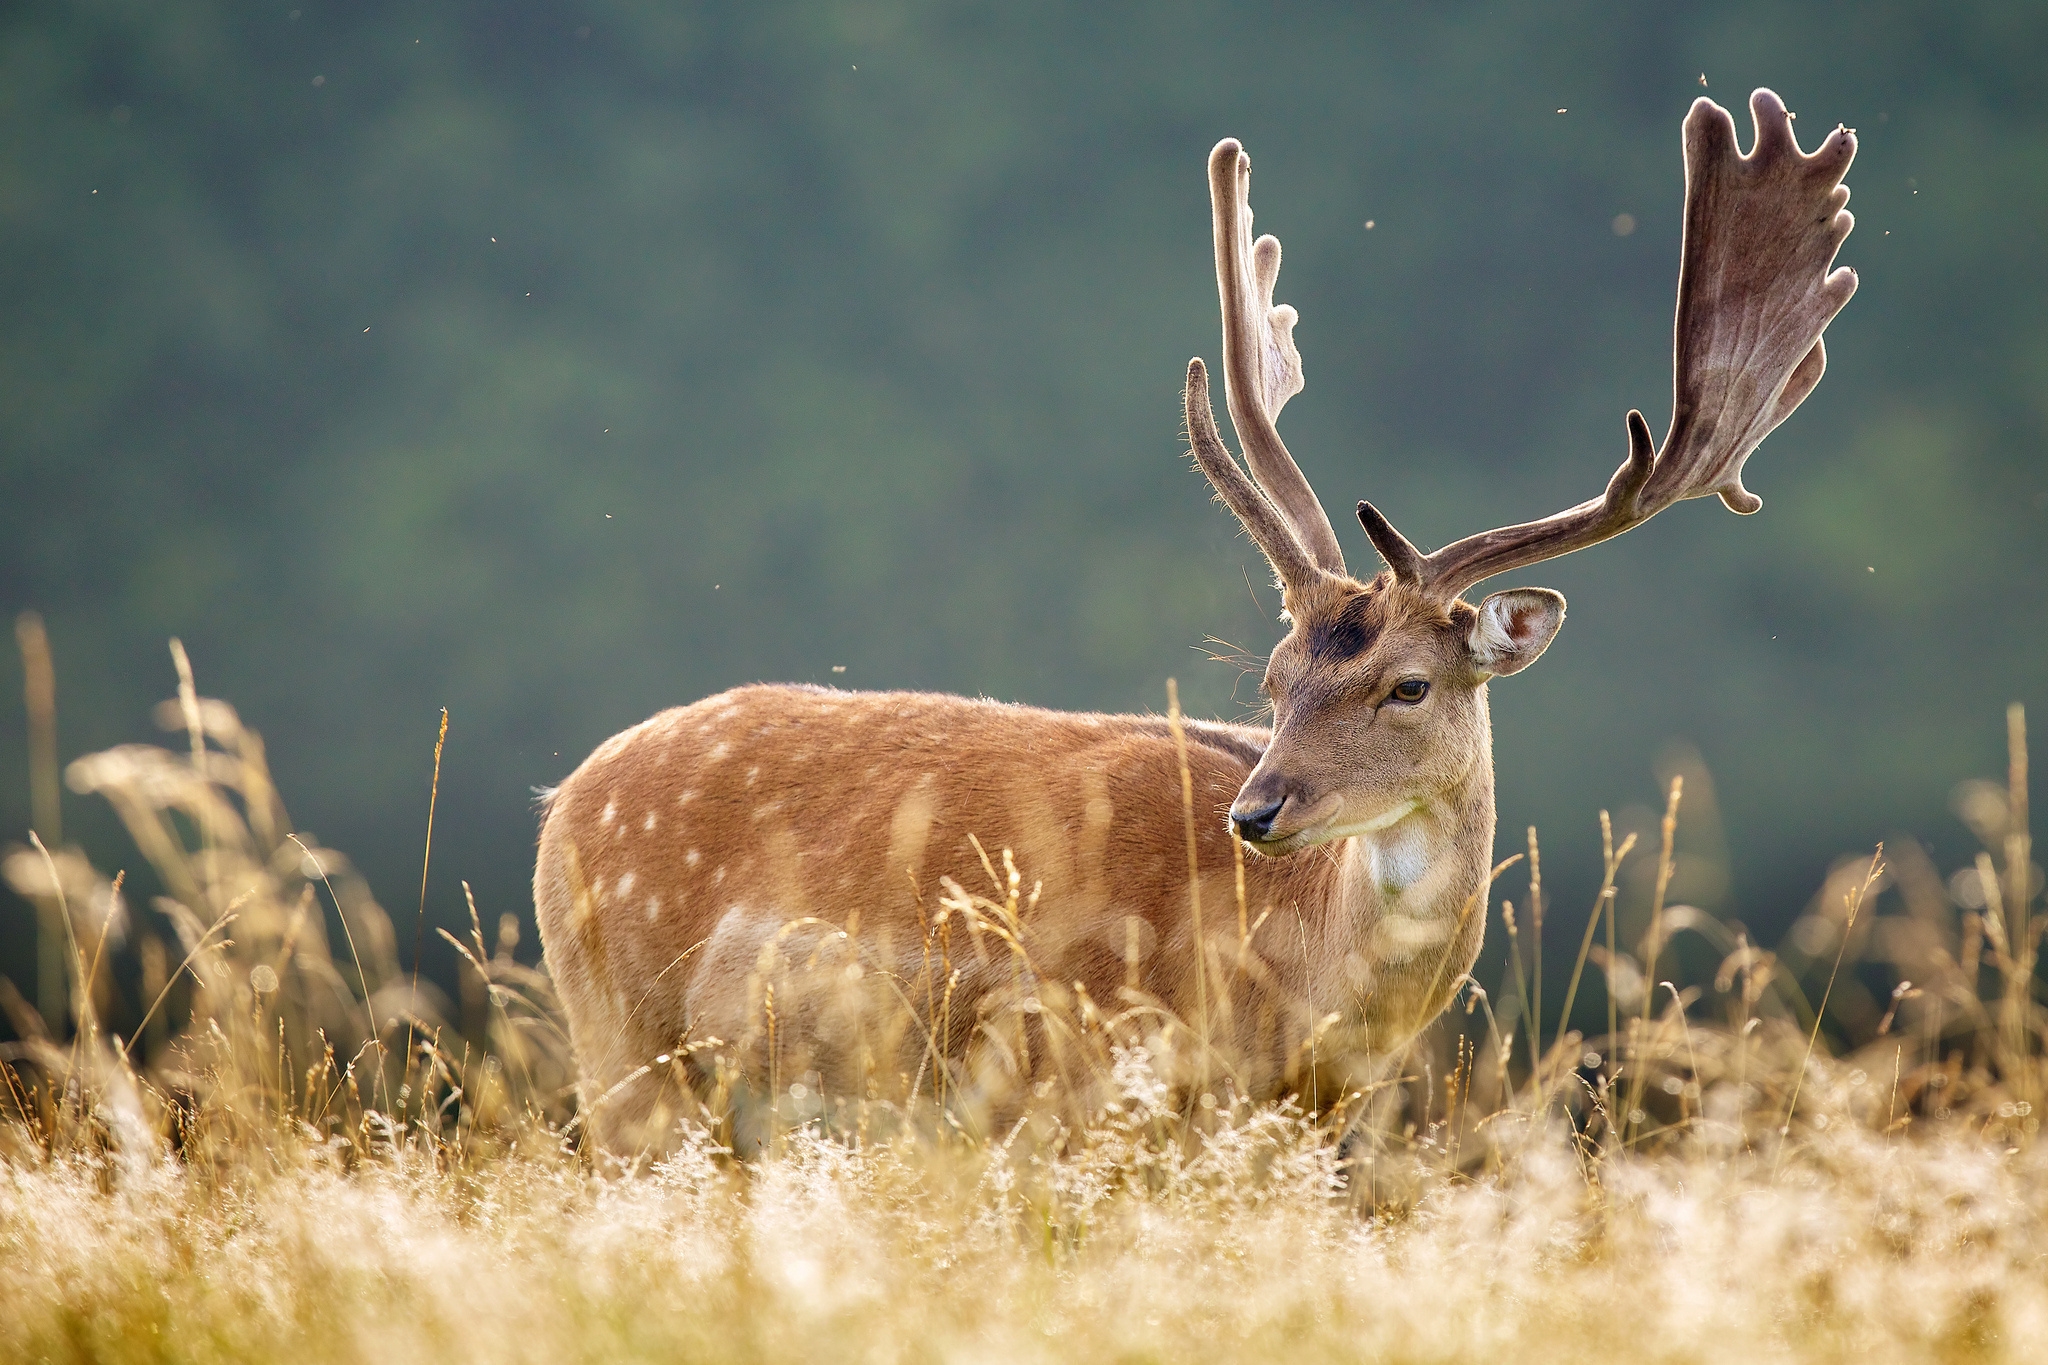 animals, grass, spotted, spotty, animal, deer Image for desktop